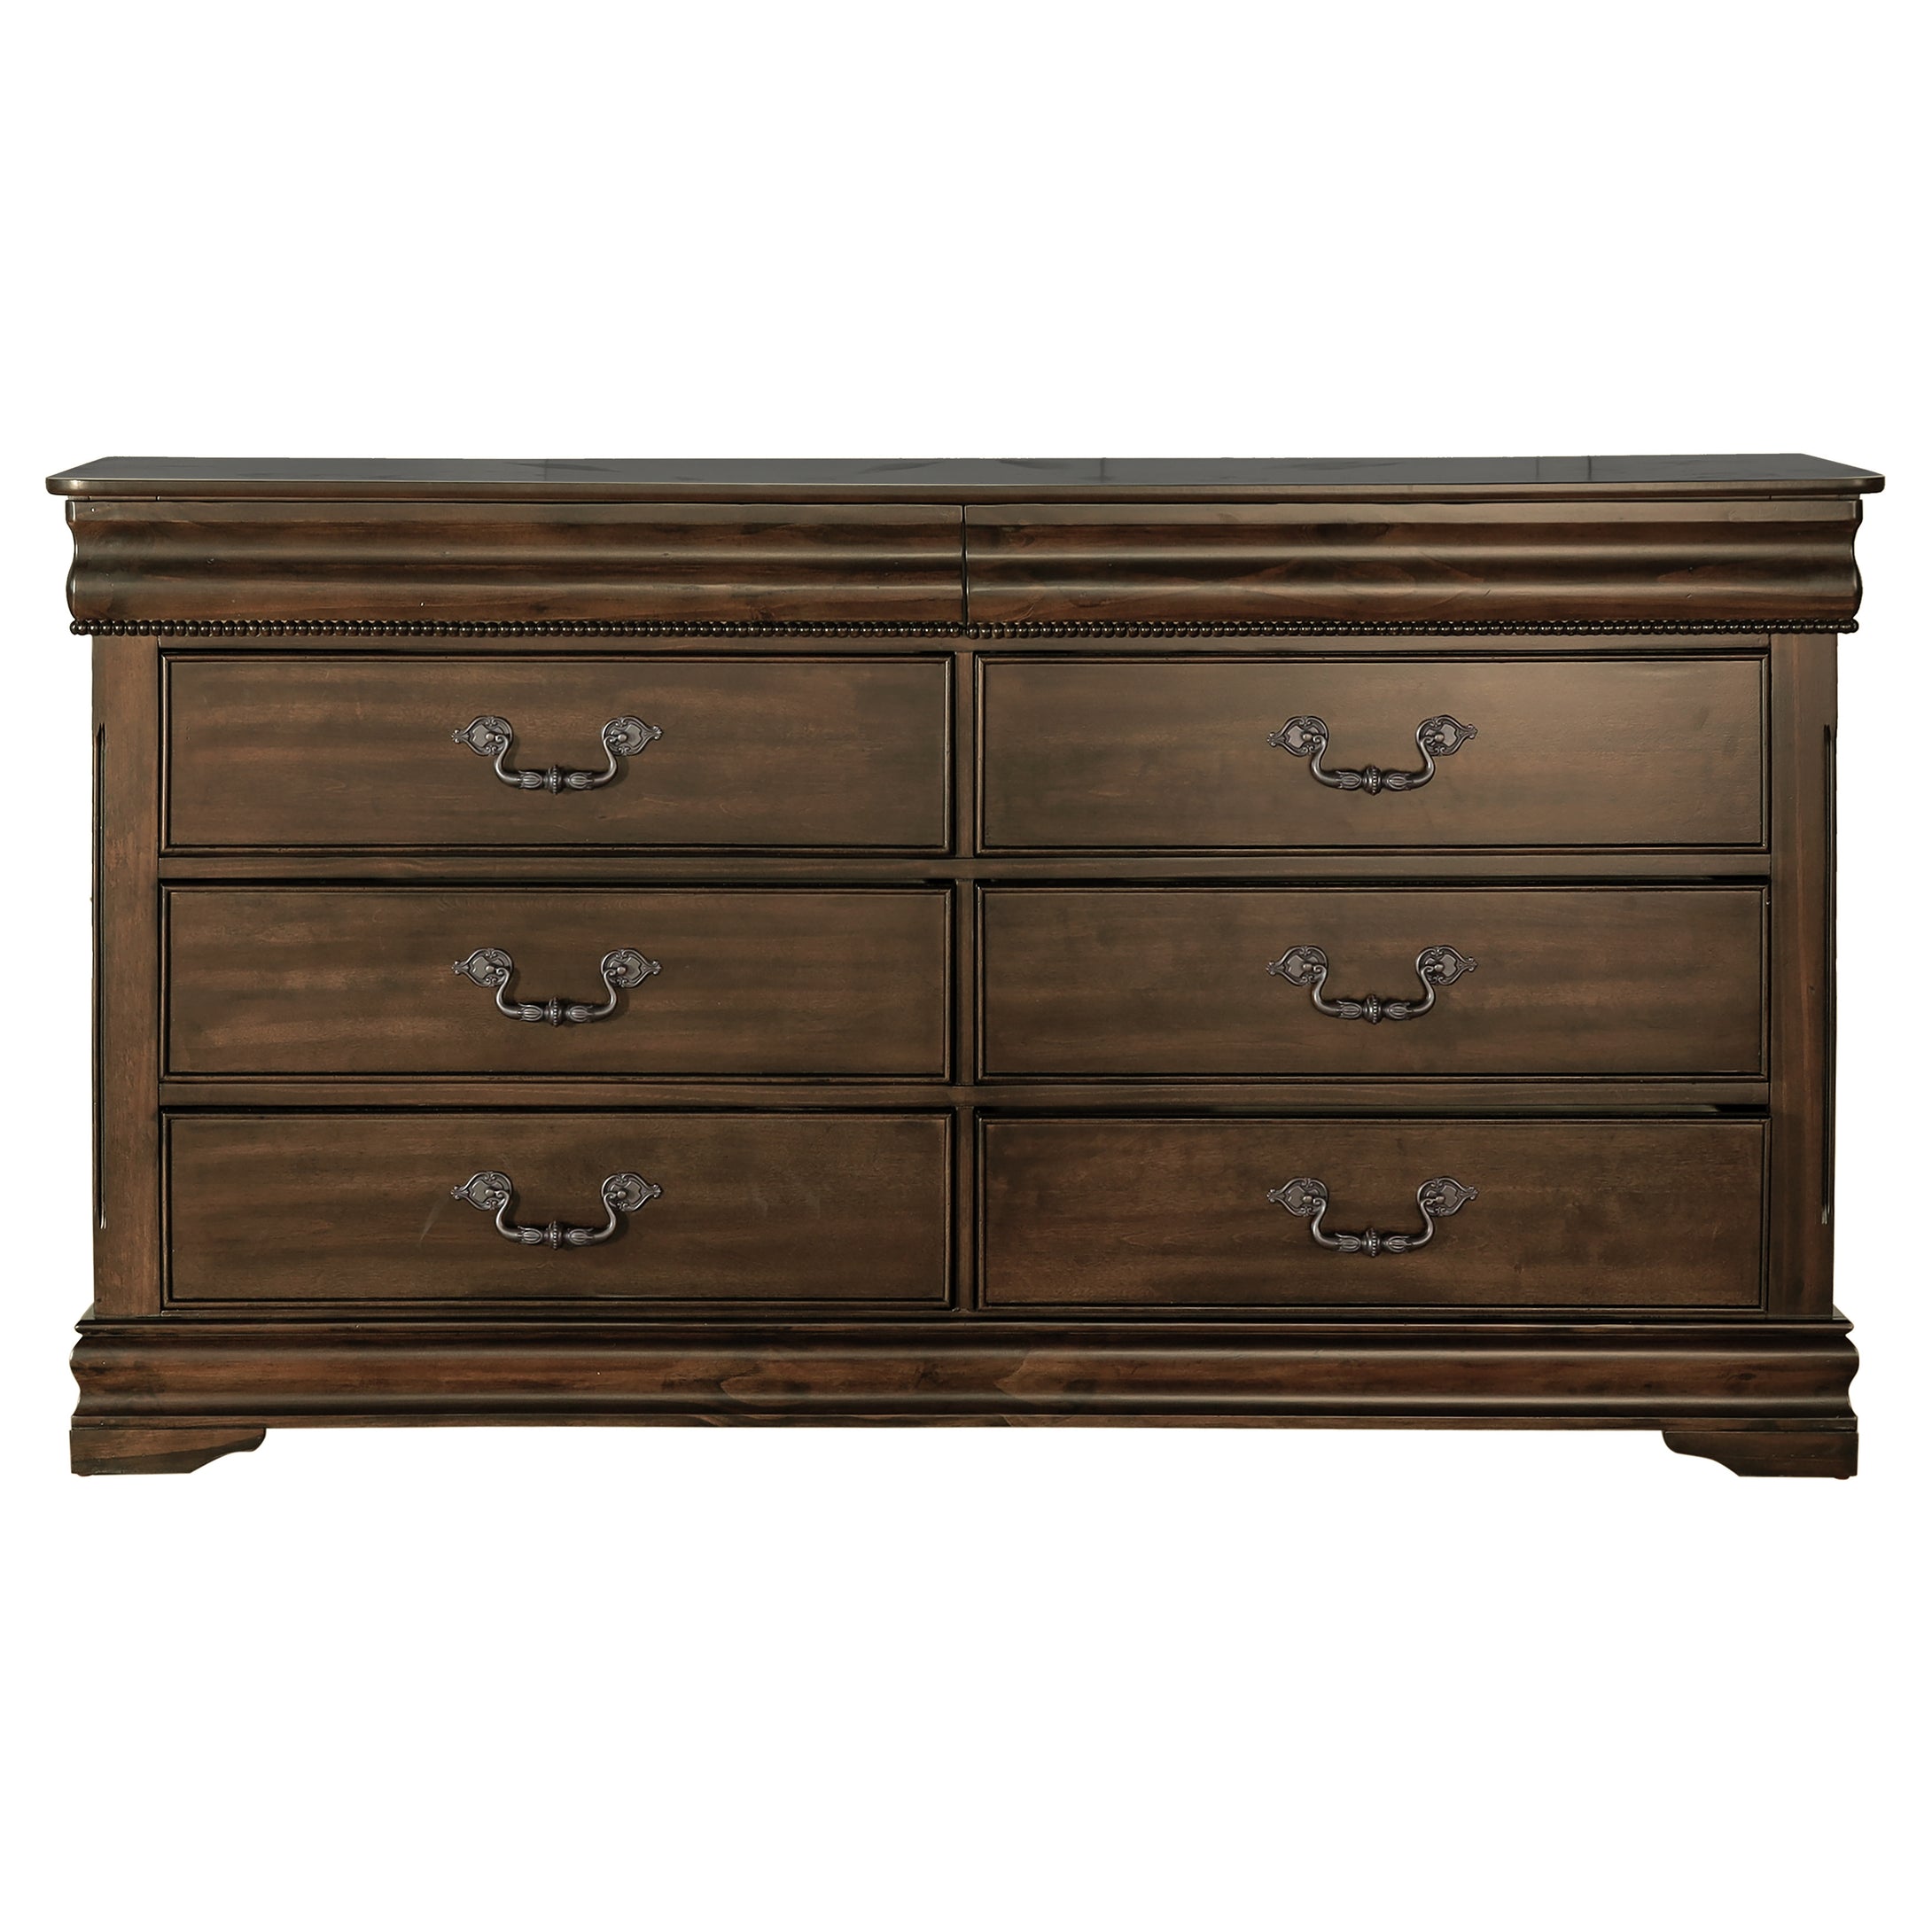 1869-5 Dresser, Two Hidden Drawers